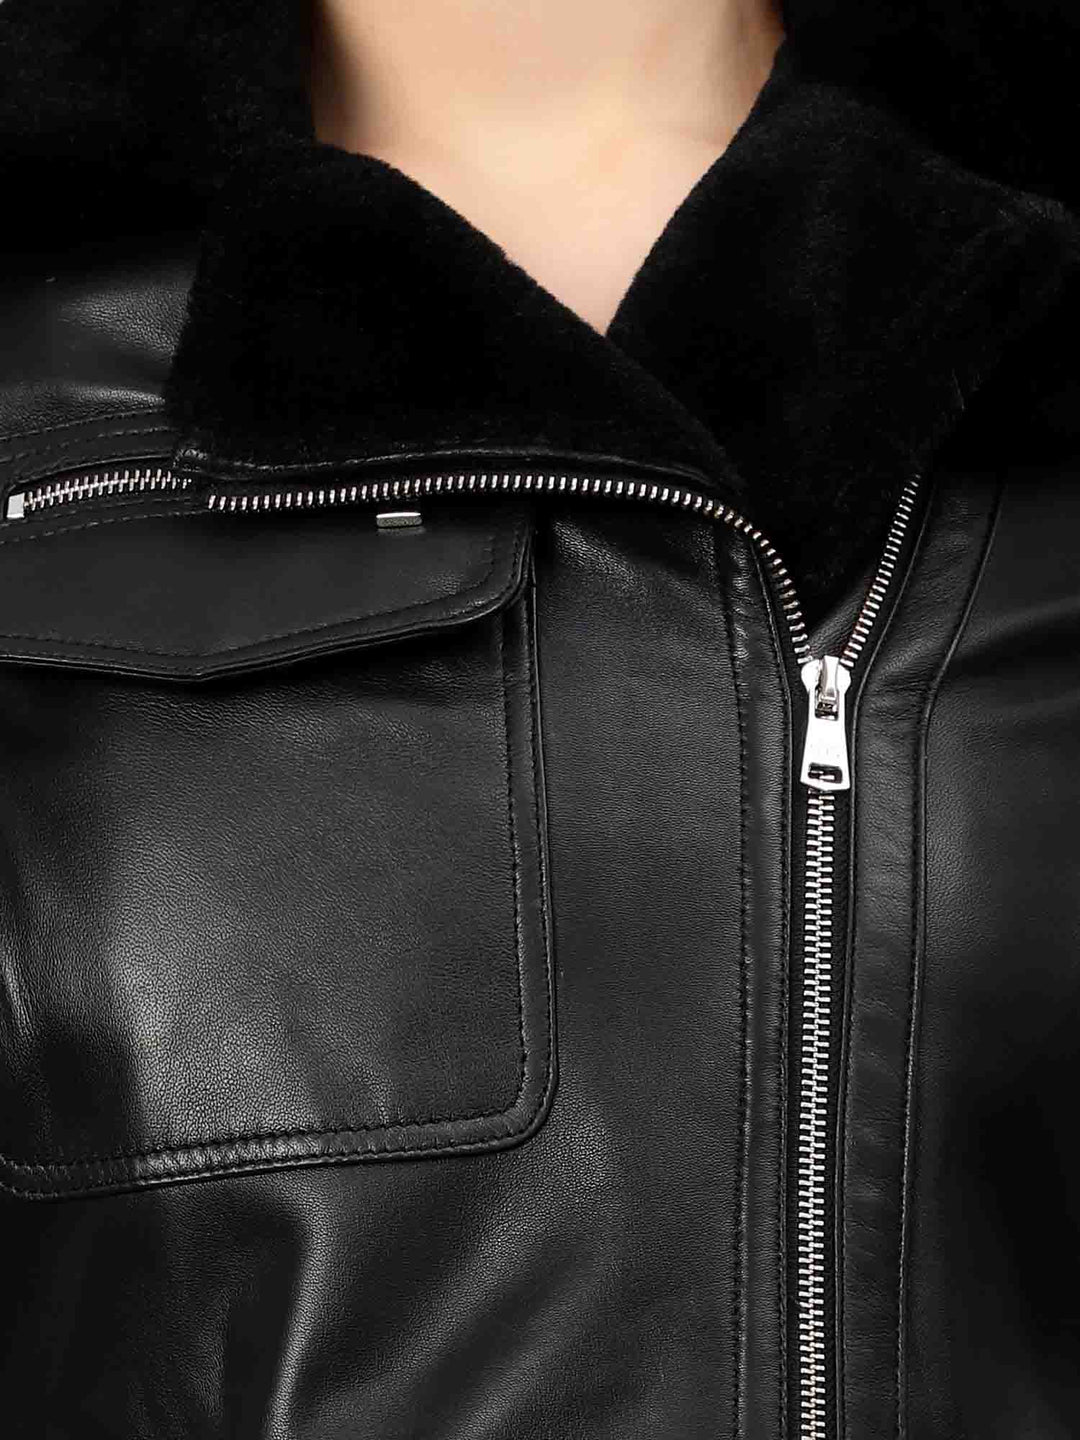 Bold and stylish women's biker jacket - Saint Darcy in black leather.